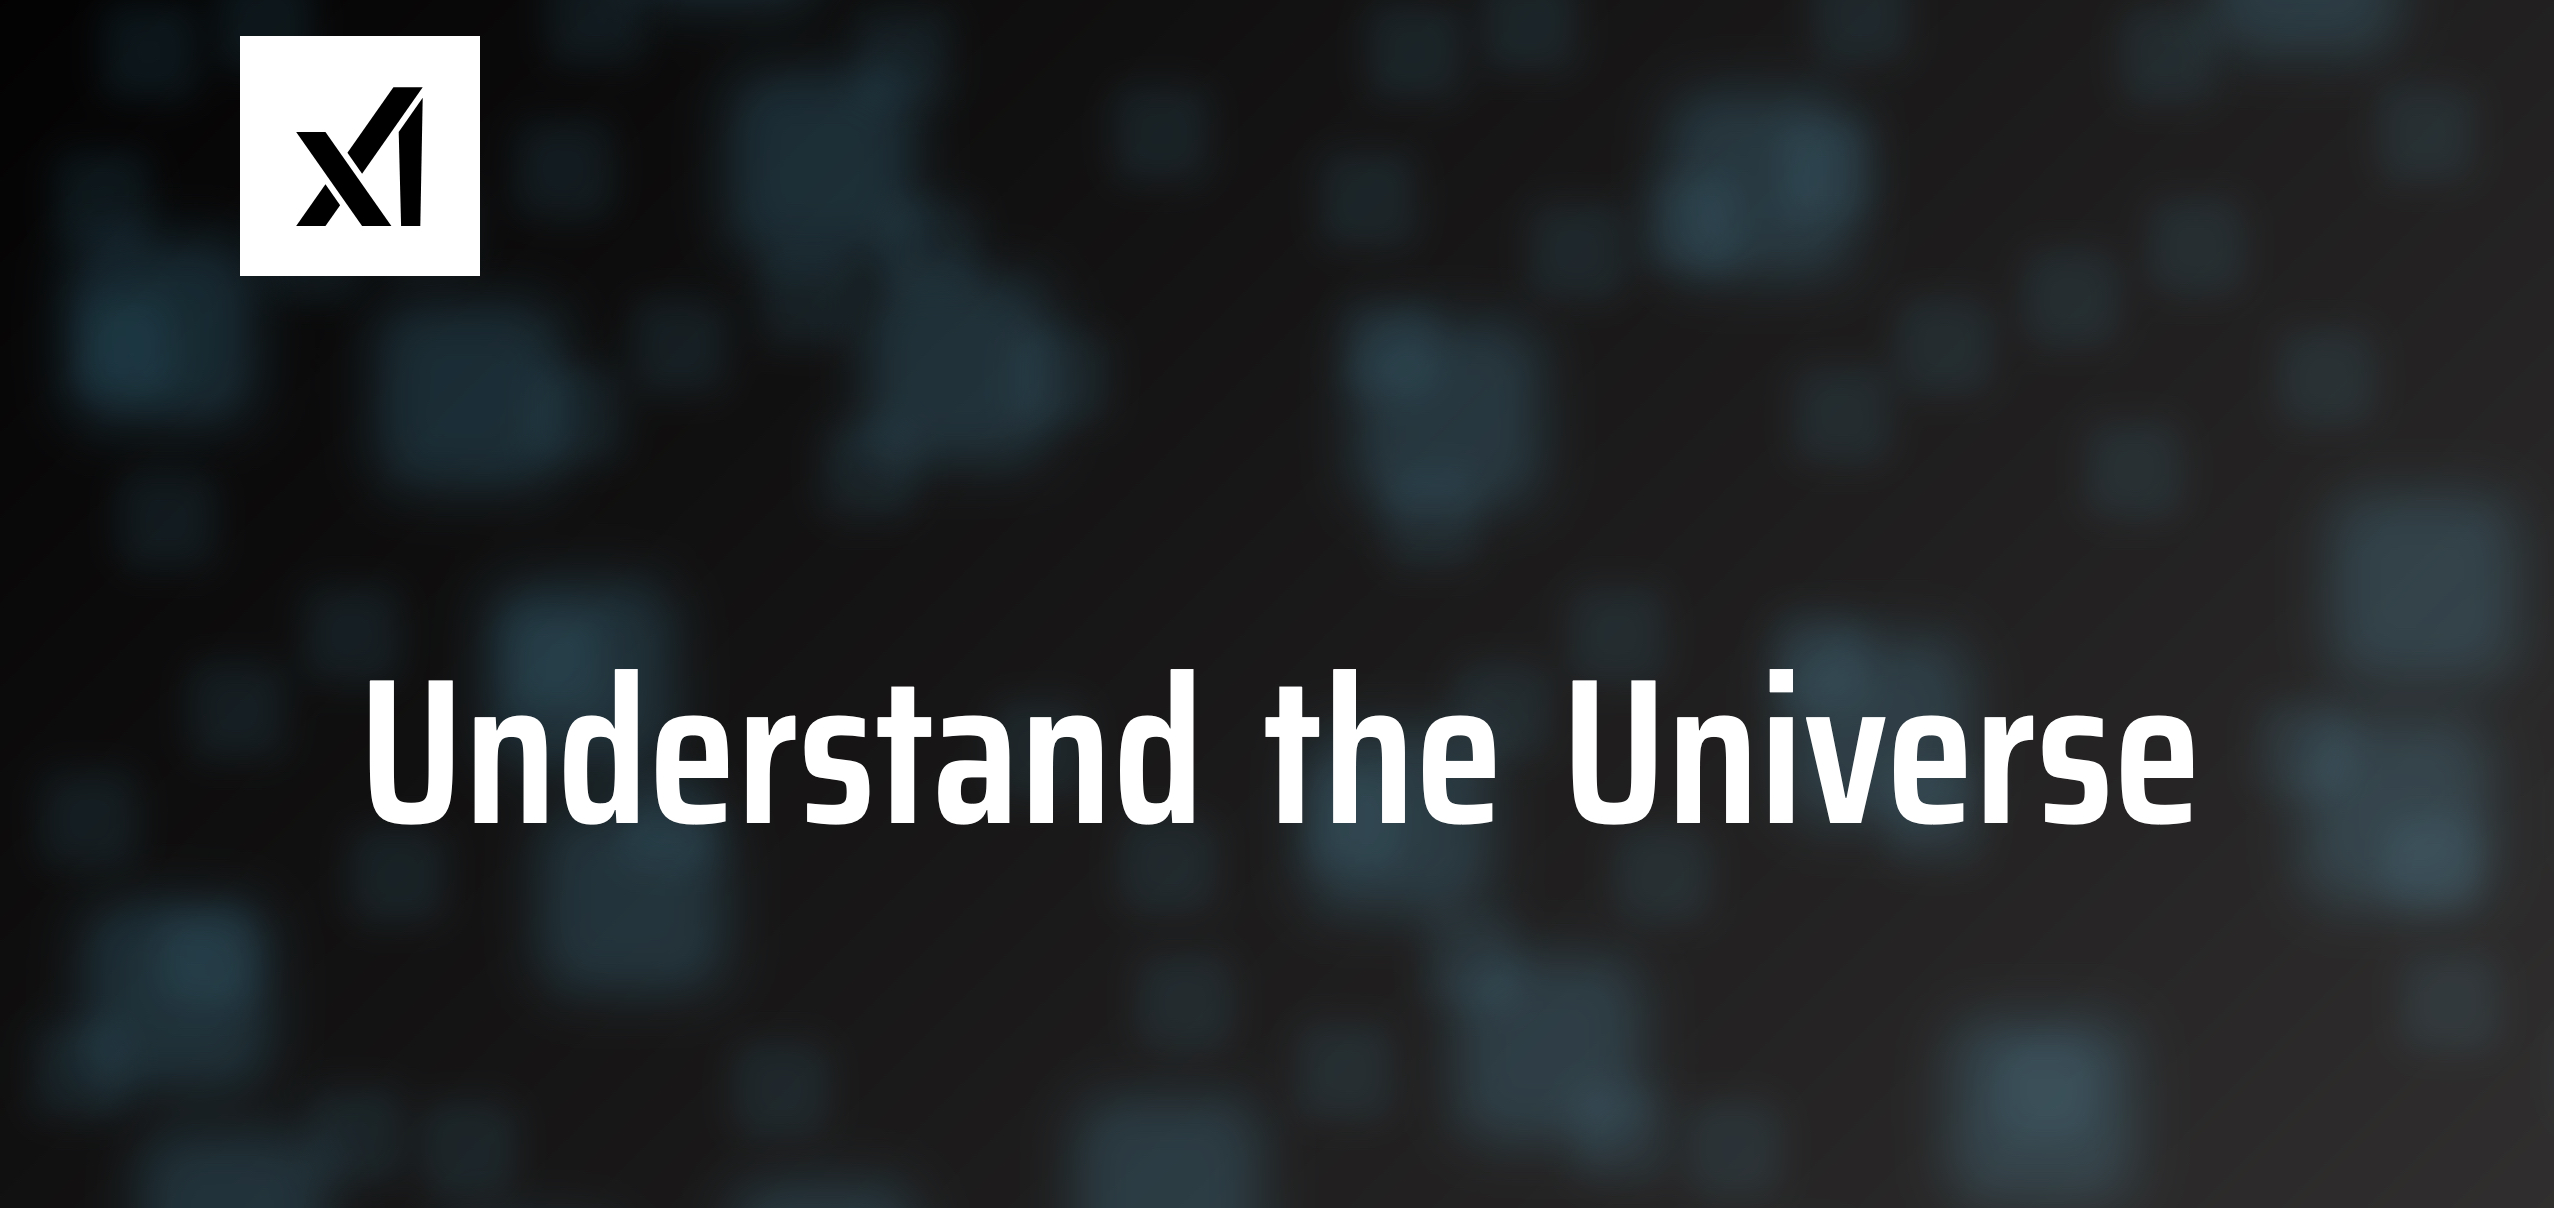 xai-understand-the-universe